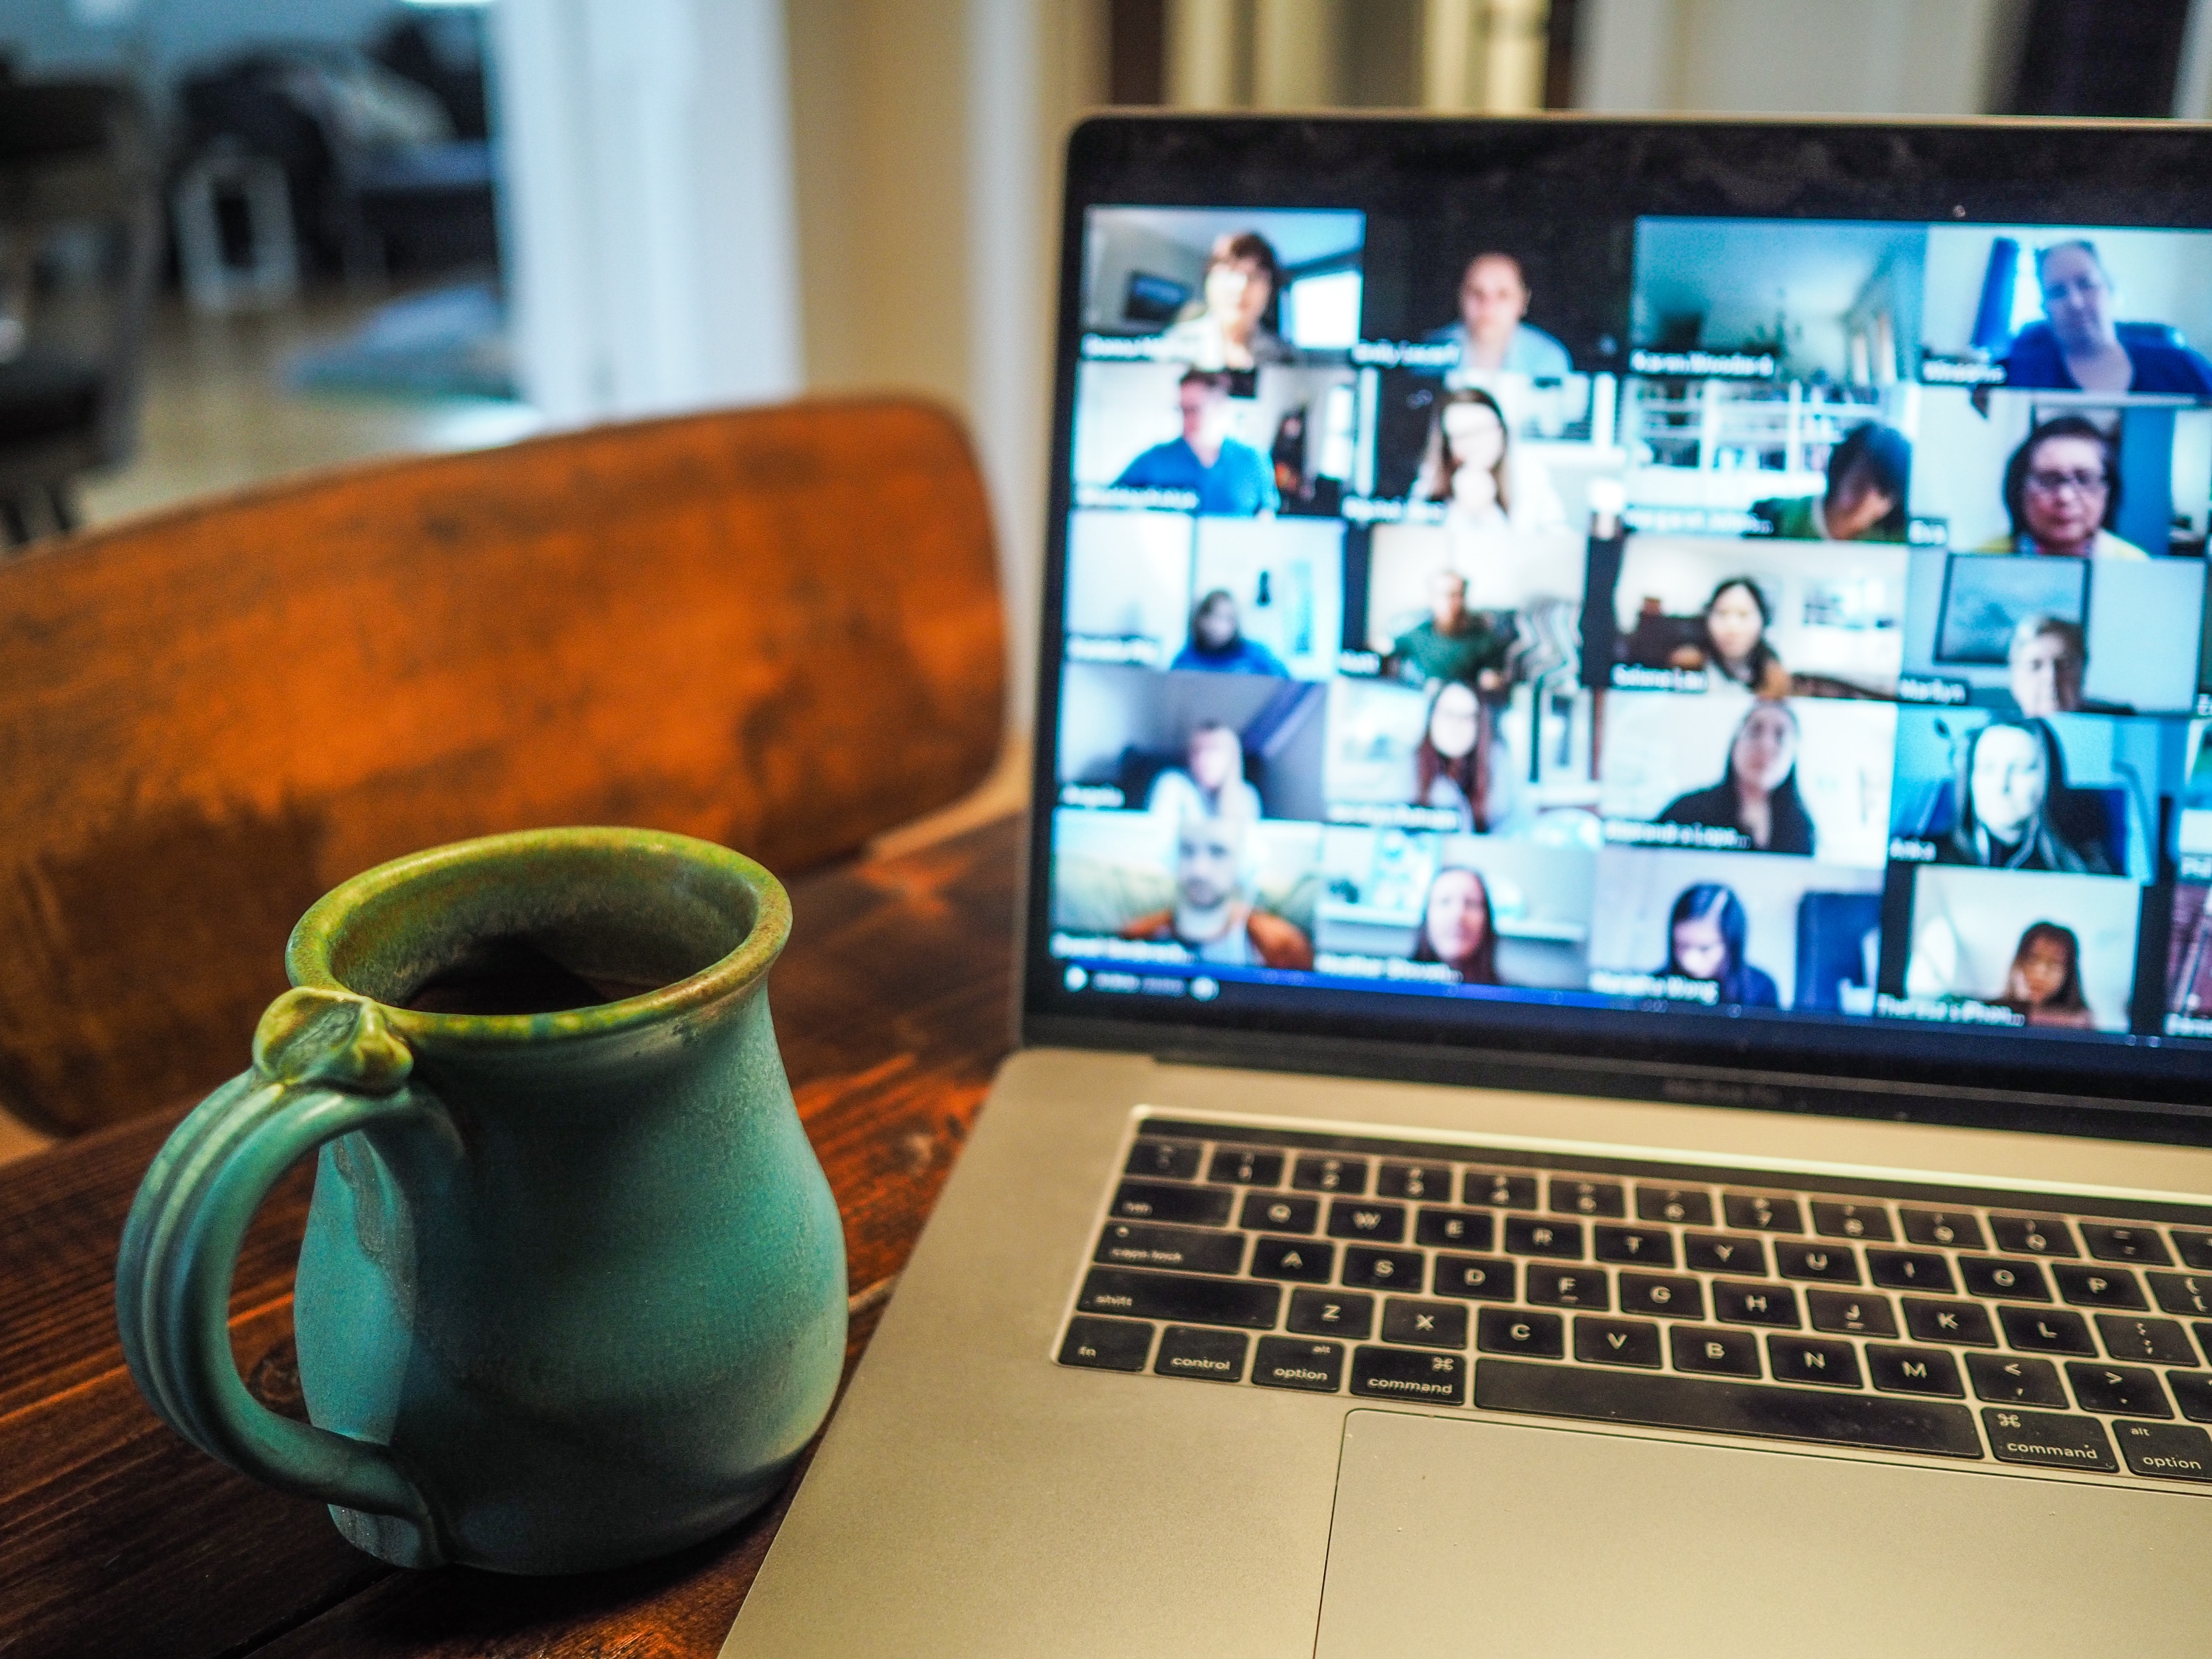 Computer screen with virtual meeting windows and coffee mug.